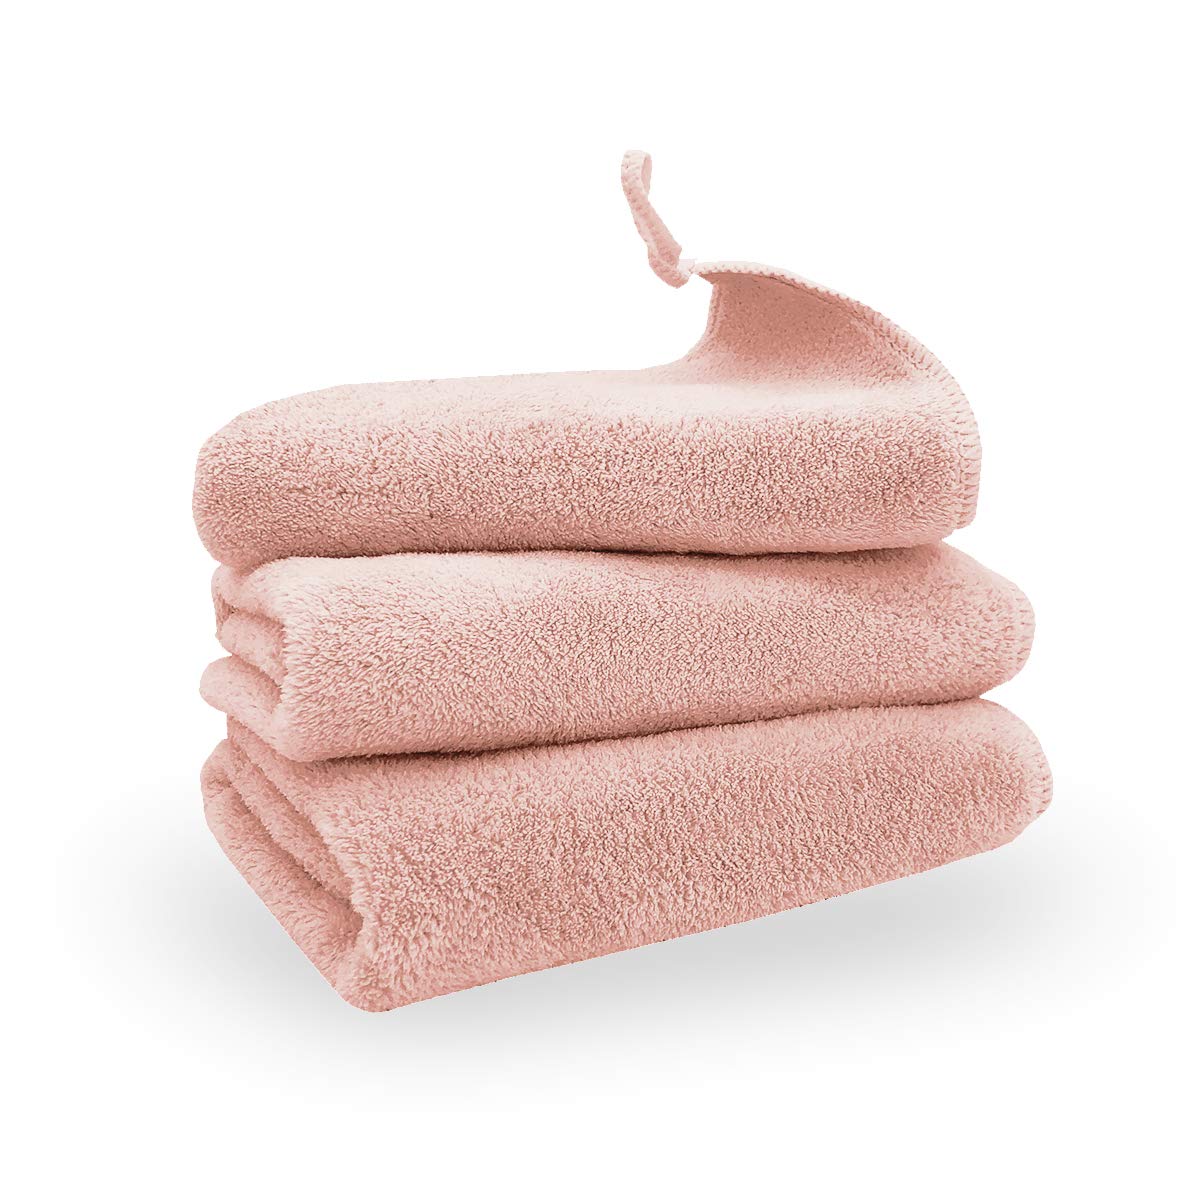 Xinrjojo 4 Piece Microfiber Quick Dry Towels Set:1 Bath Towel 1 Hand Towel and 2 Washcloths Set Super Soft Plush Highly Absorbent- Blue